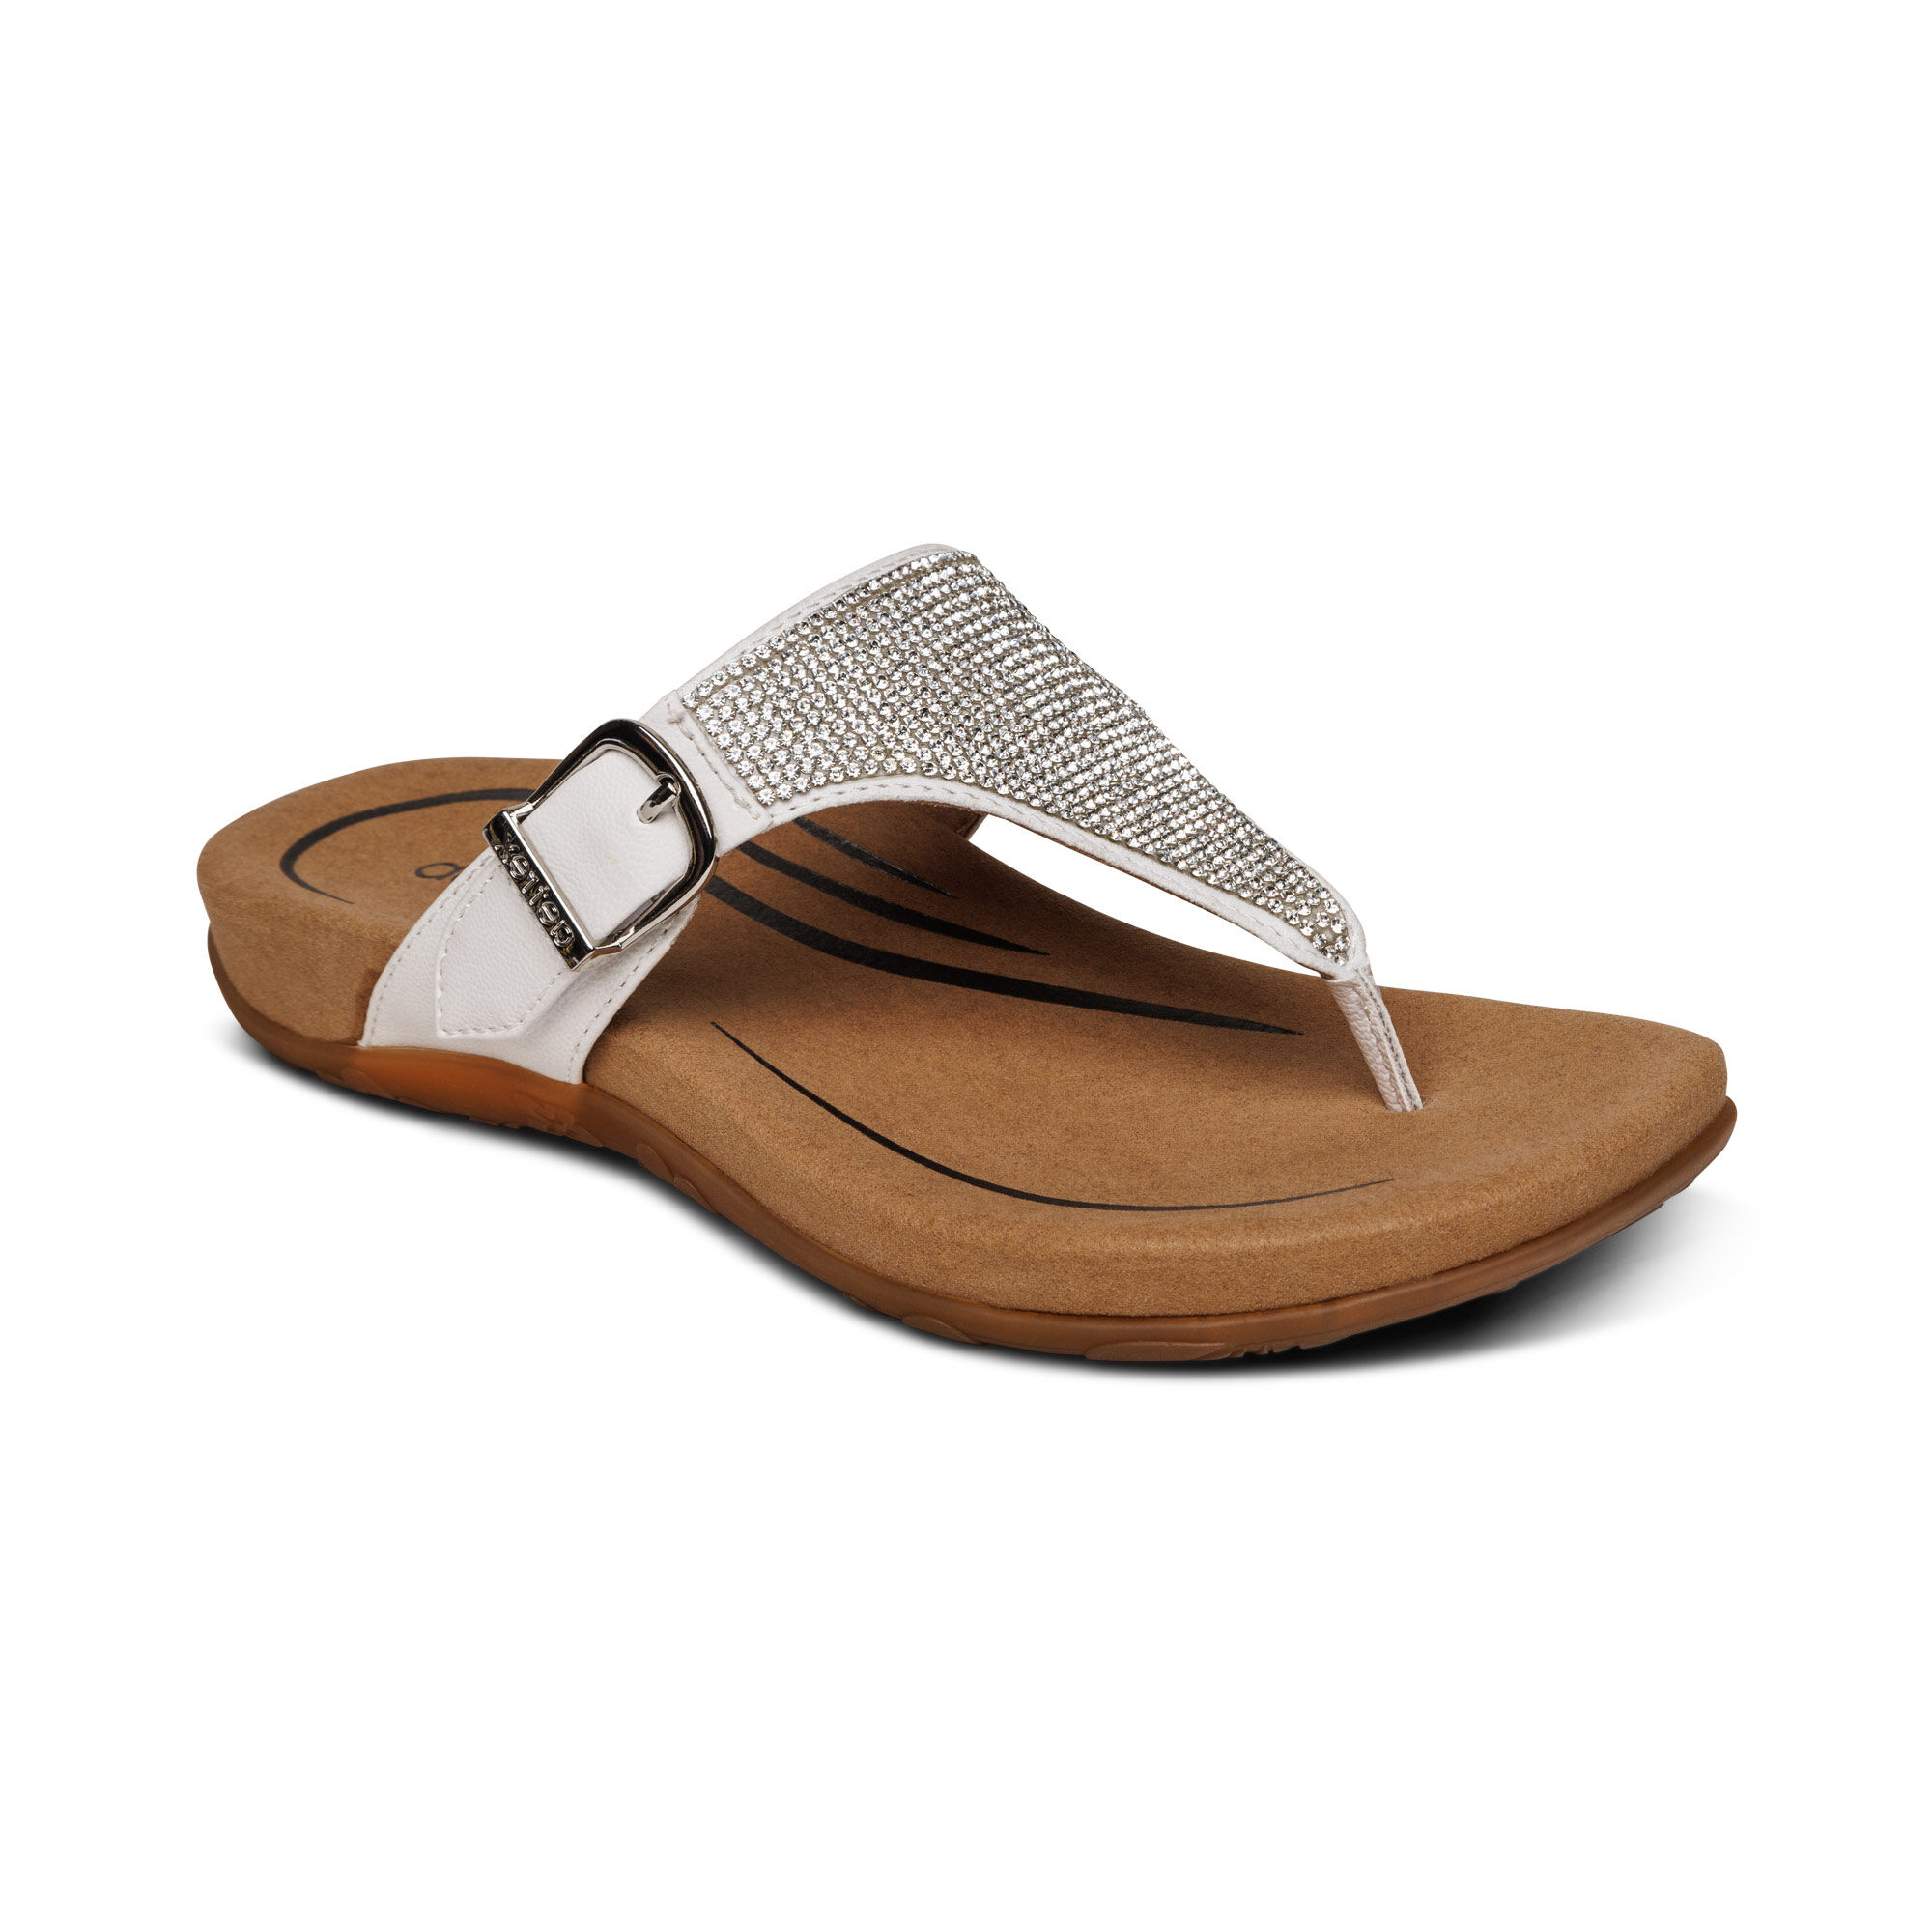 Lanai Thong Sandal | Cork sandals, Memory foam pad, Designer sandals